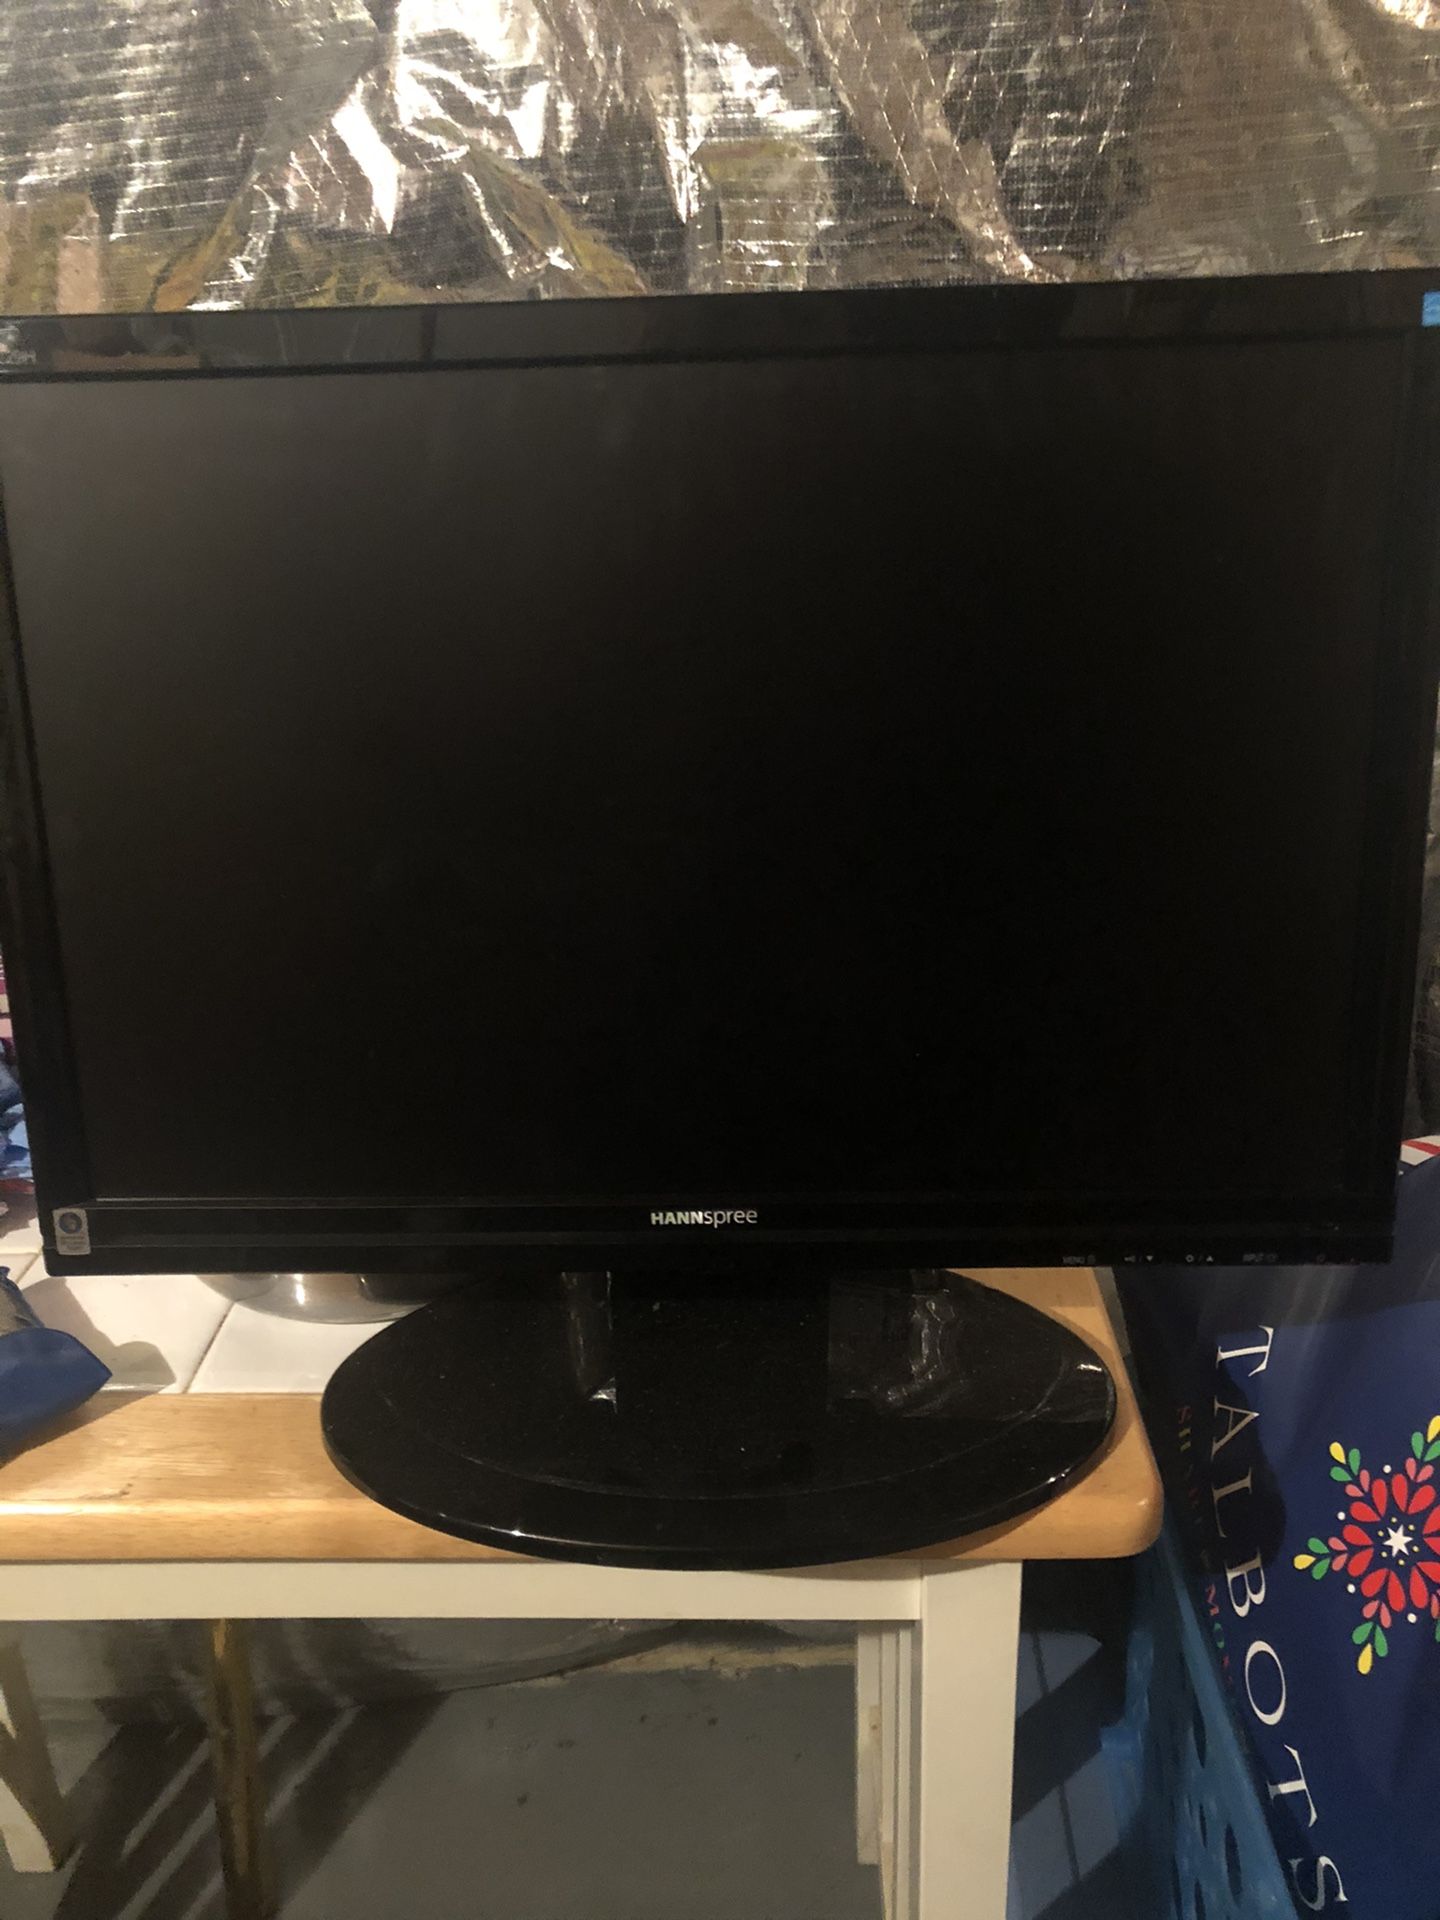 Hannspree computer monitor